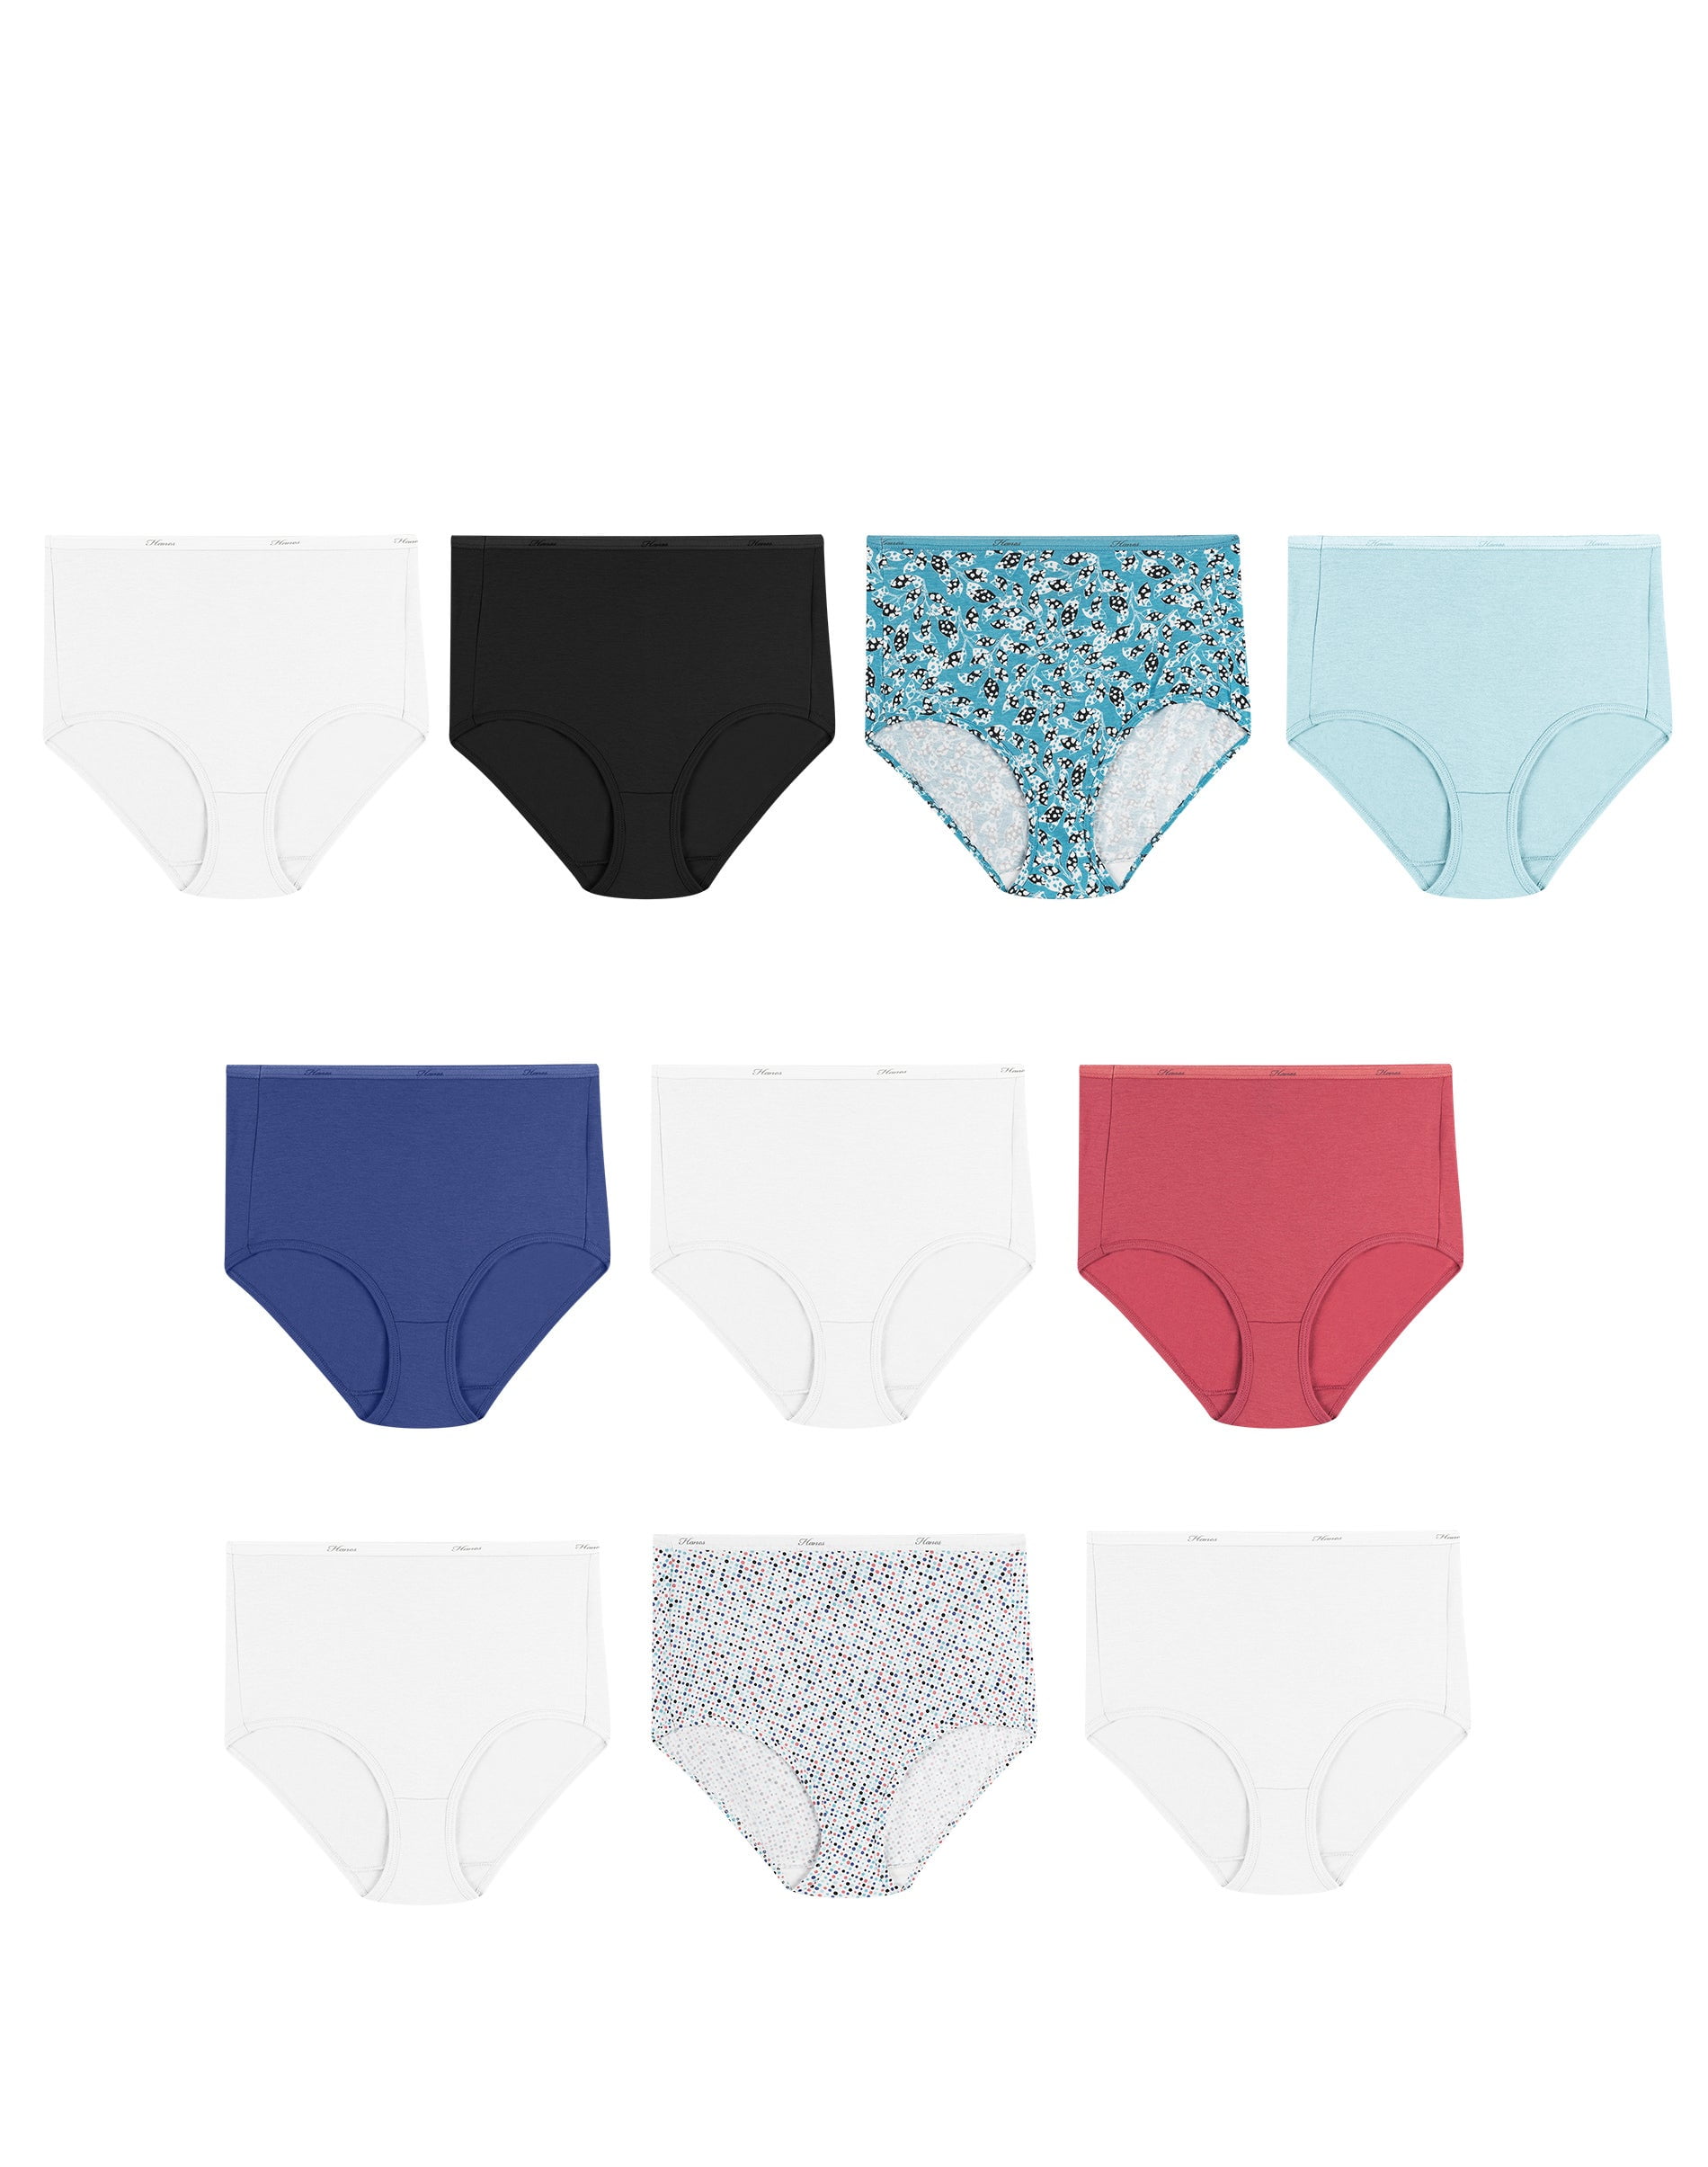 Hanes Womens 10-Pack Cotton Briefs Lady Underwear Panties